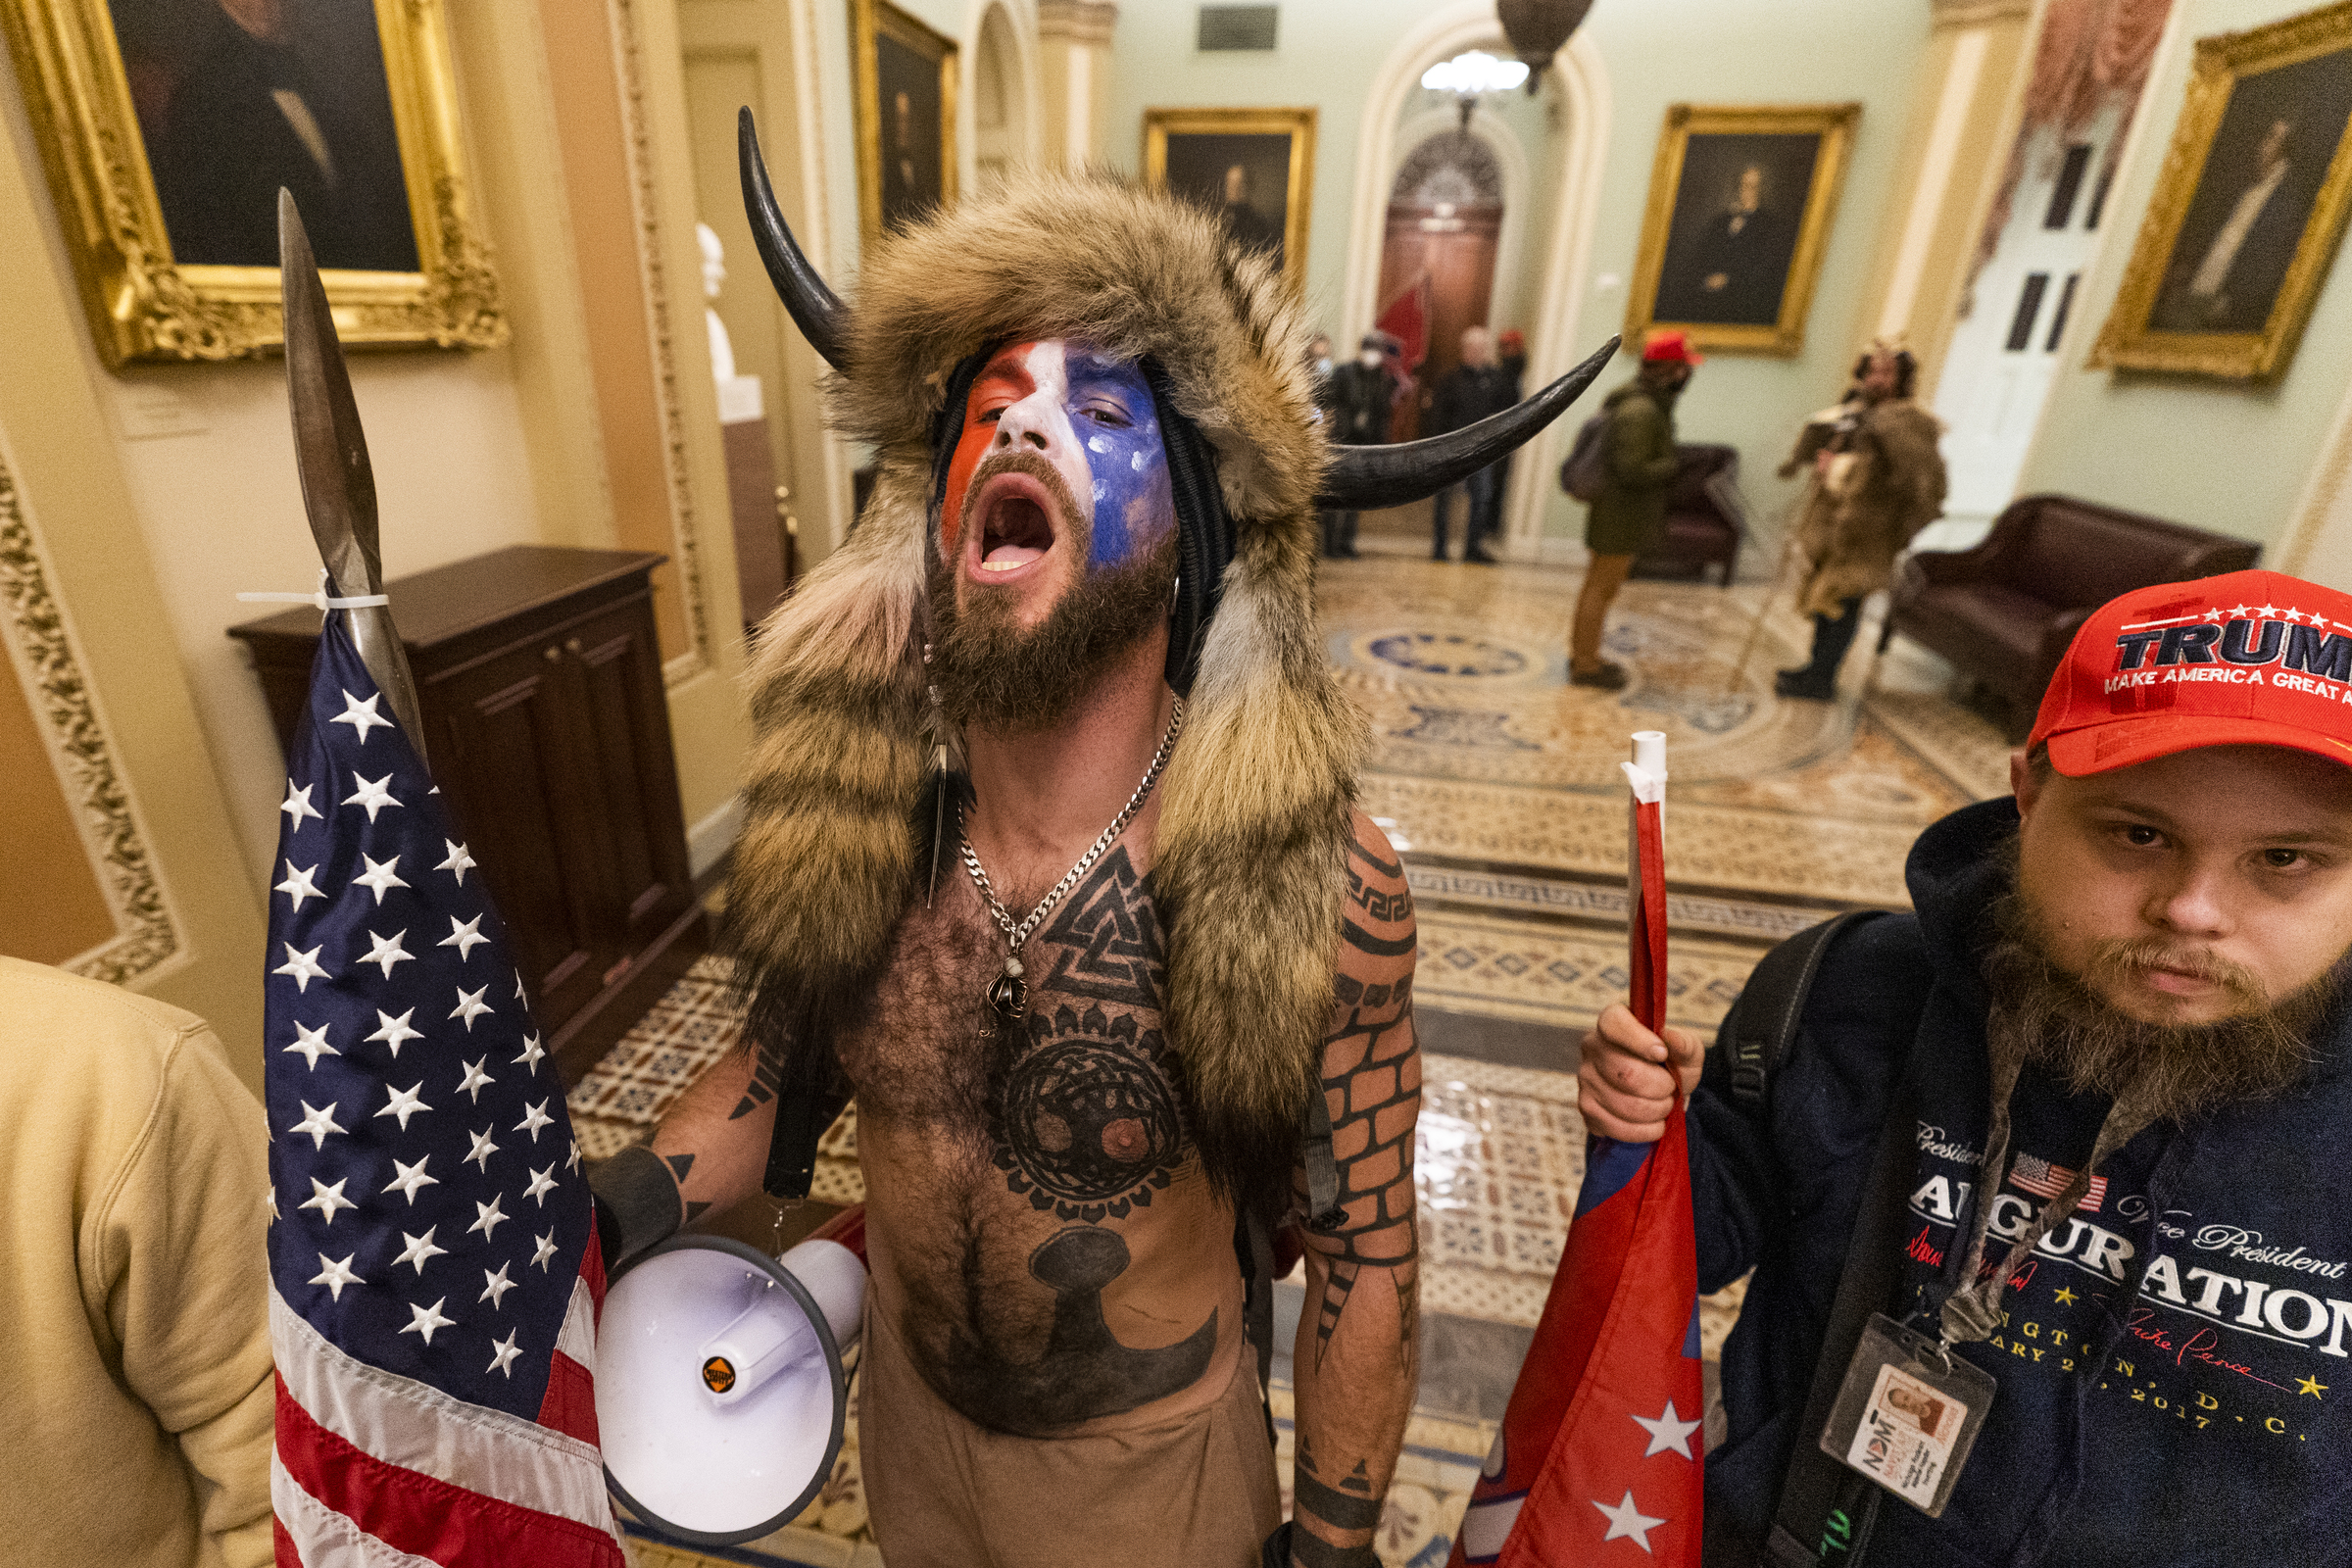 A supporter of President Donald Trump chants outside the Senate Chamber inside the Capitol, Wednesday, Jan. 6, 2021 in Washington. (AP Photo/Manuel Balce Ceneta)